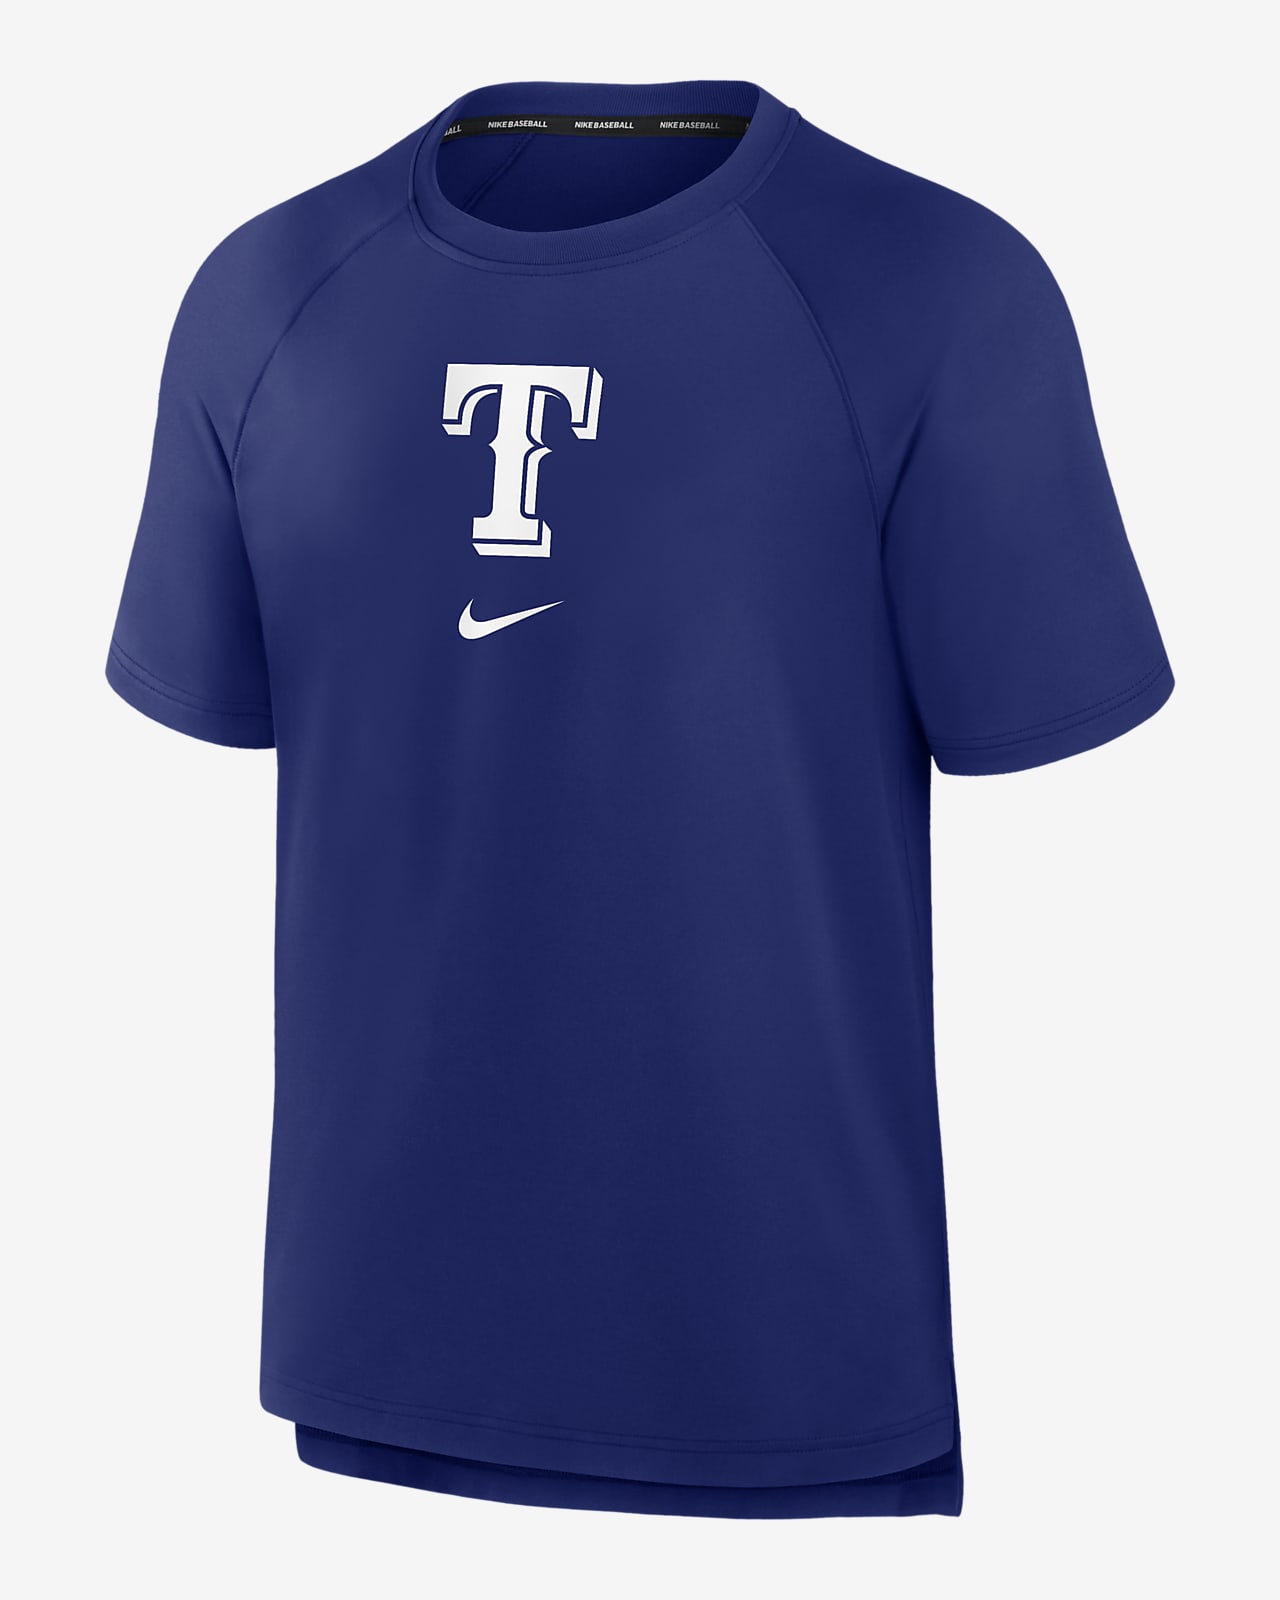 Texas Rangers Authentic Collection Pregame Men's Nike Dri-FIT MLB T-Shirt